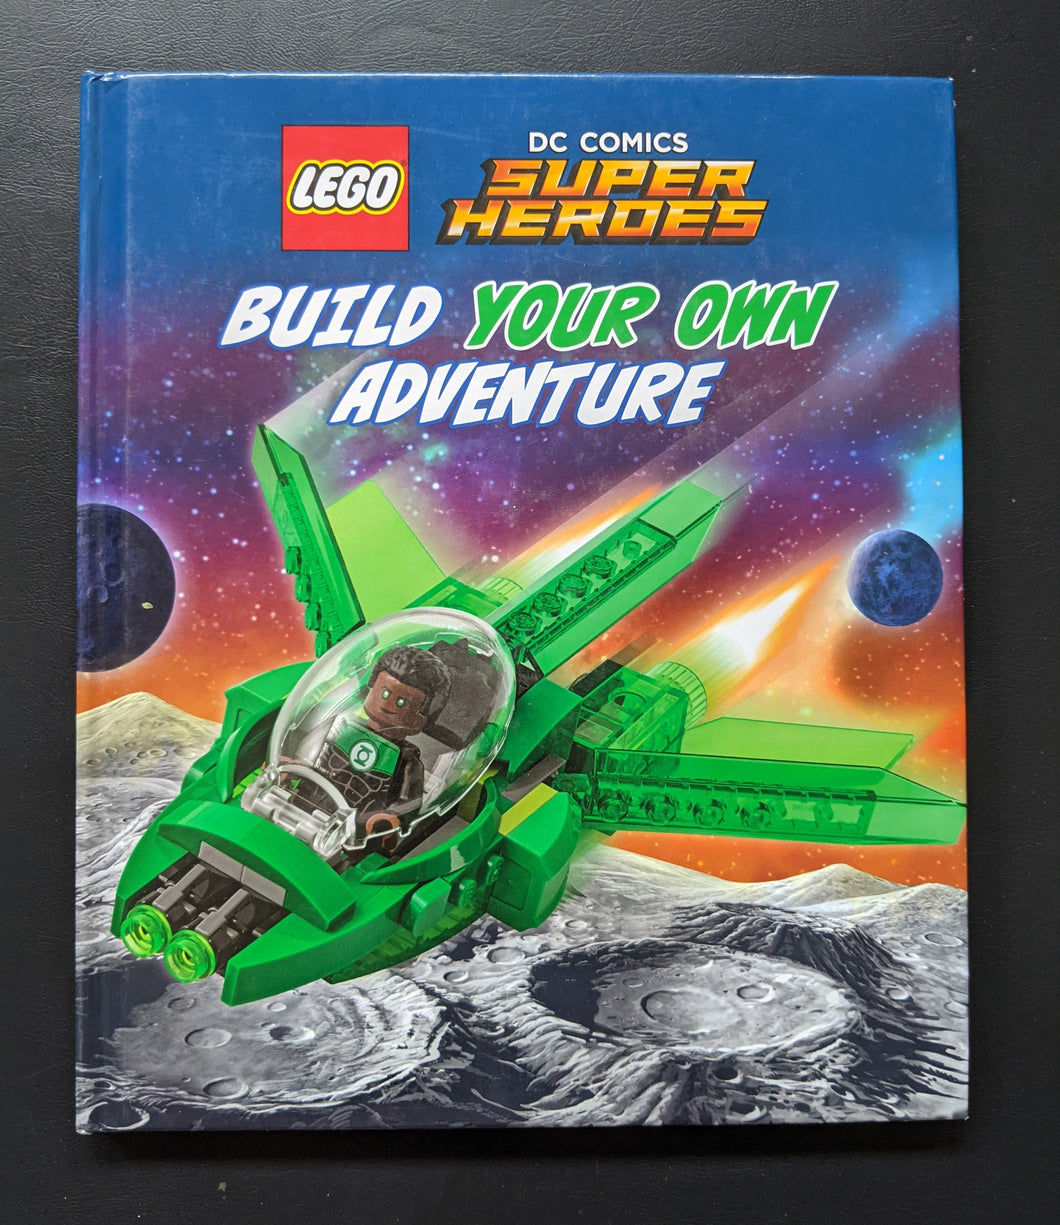 Lego DC COMICS Super Heroes Build Your Own Adventure